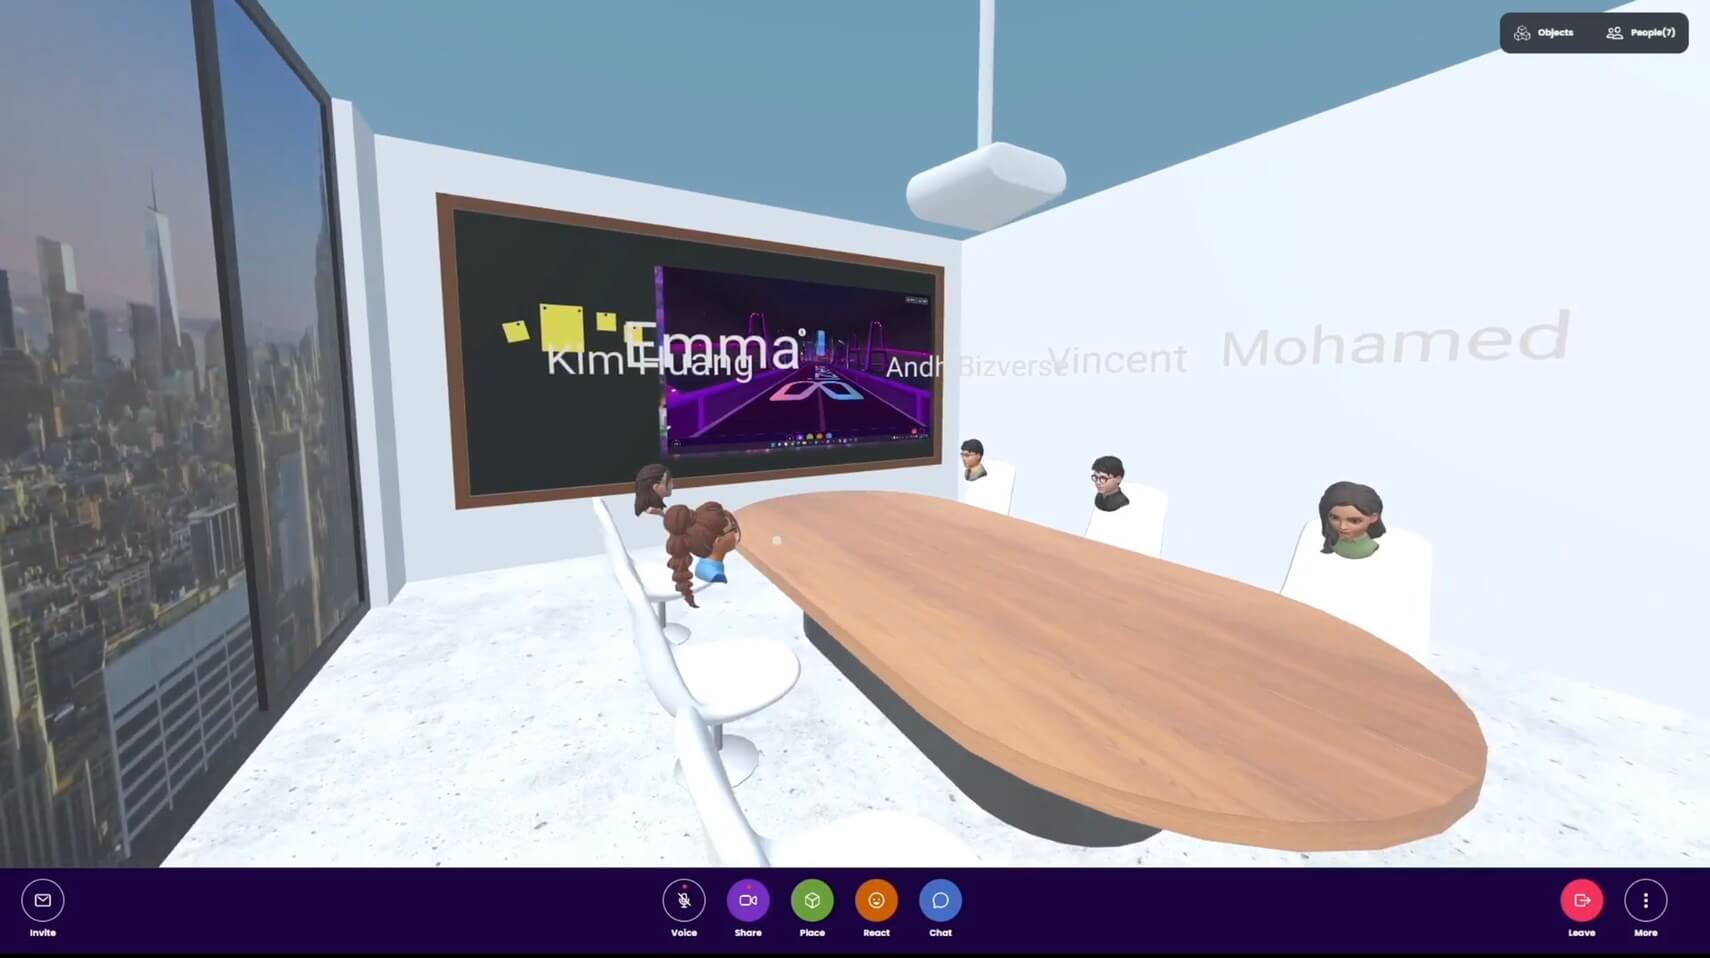 360 space creates an online classroom like a real classroom